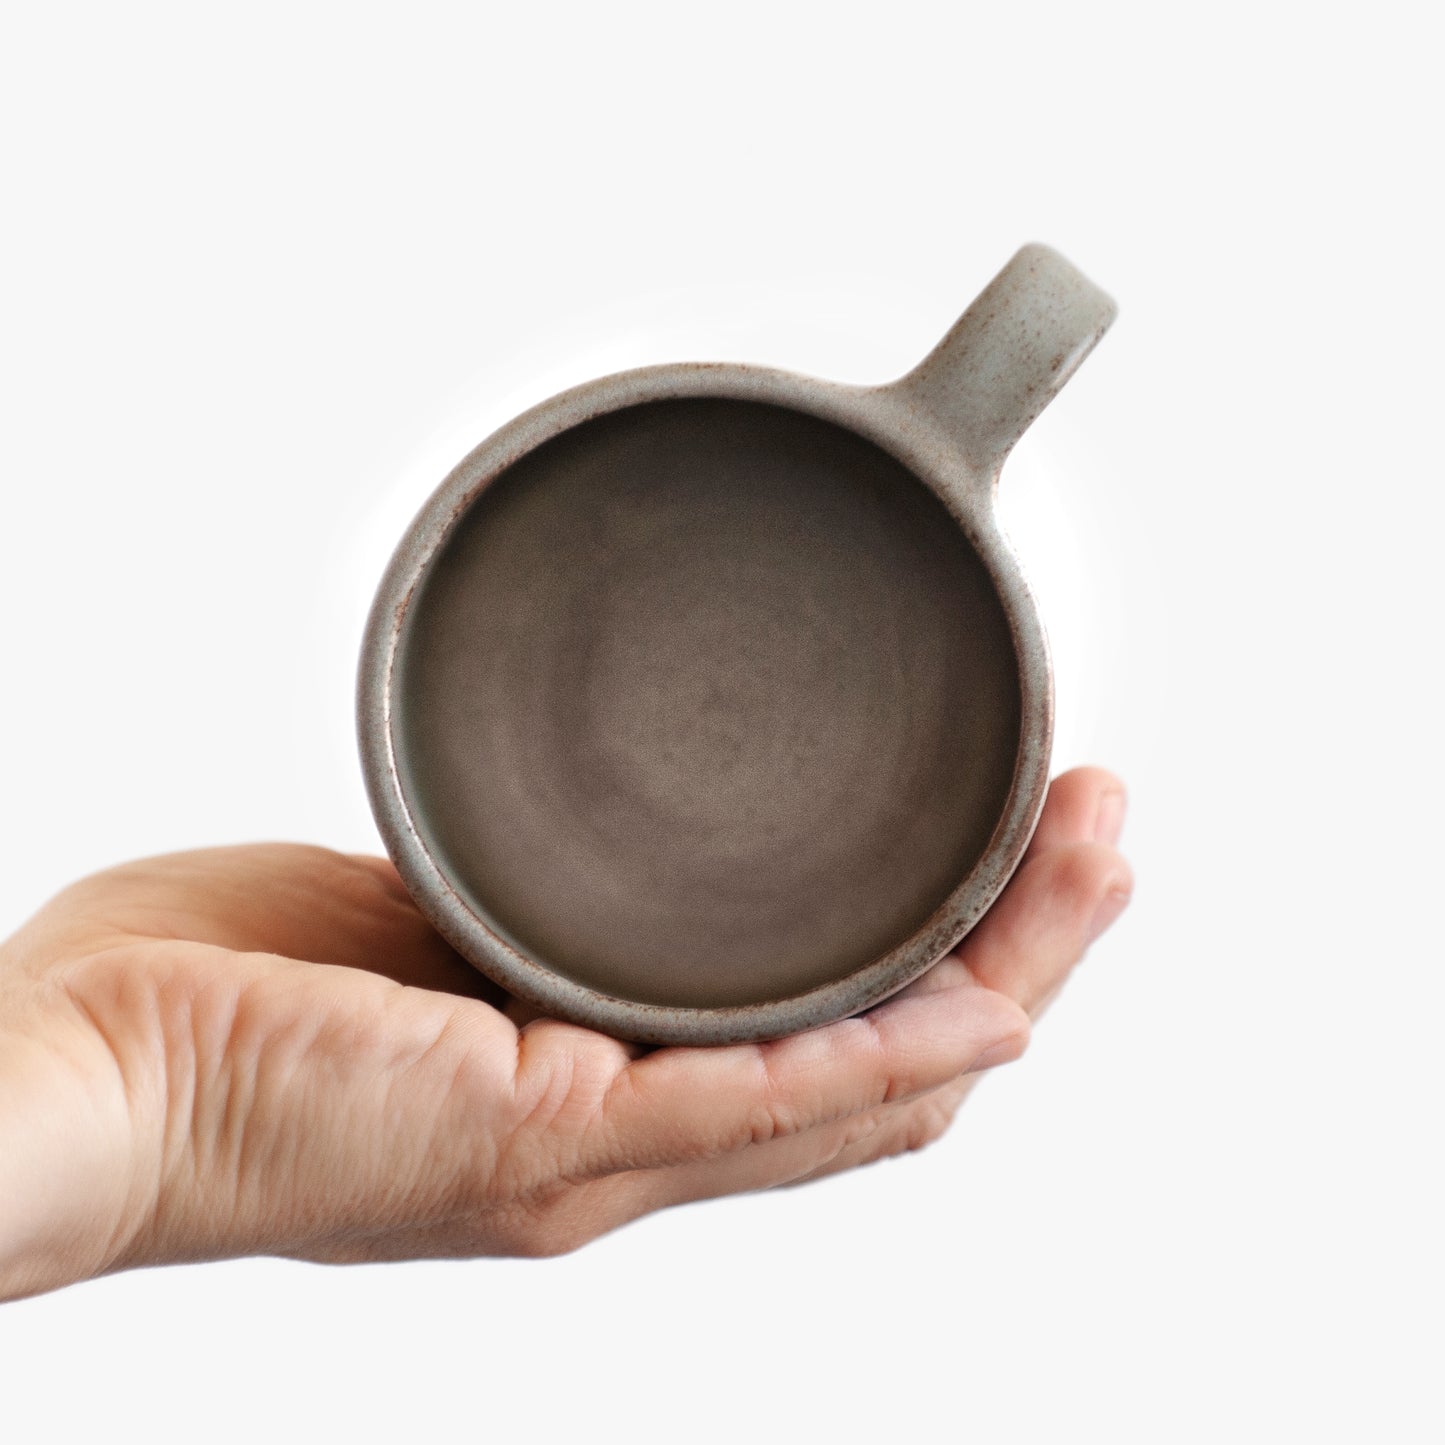 coffee or tea mug in grey-blue